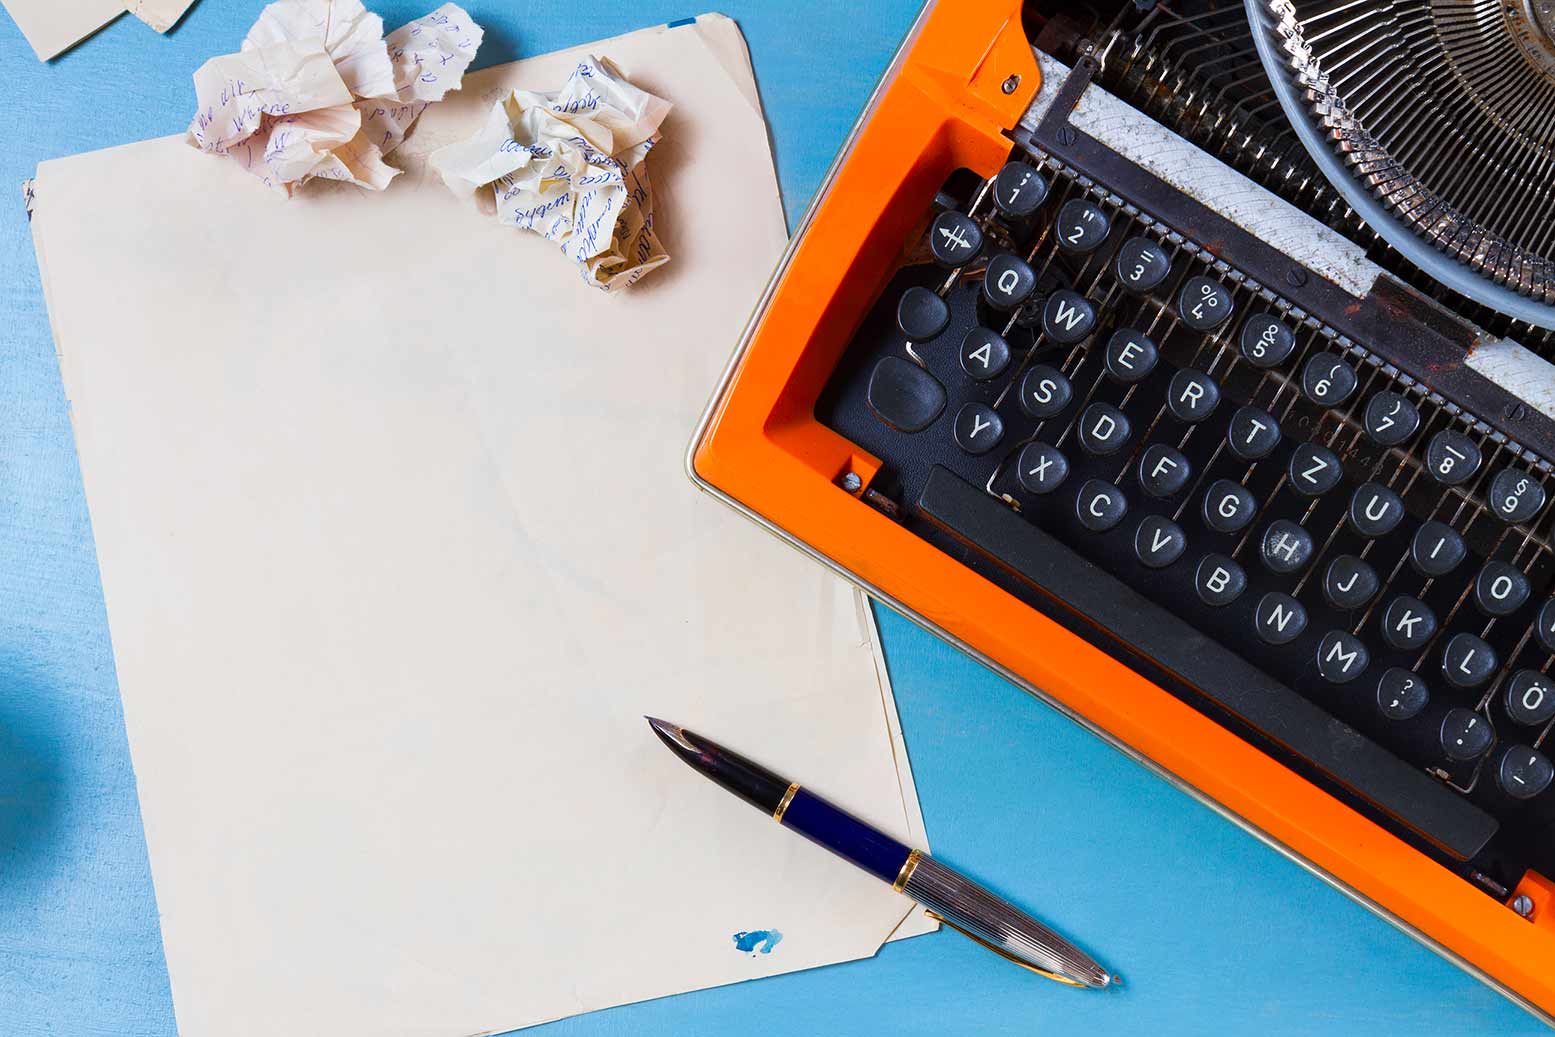 Typewriter and stationery